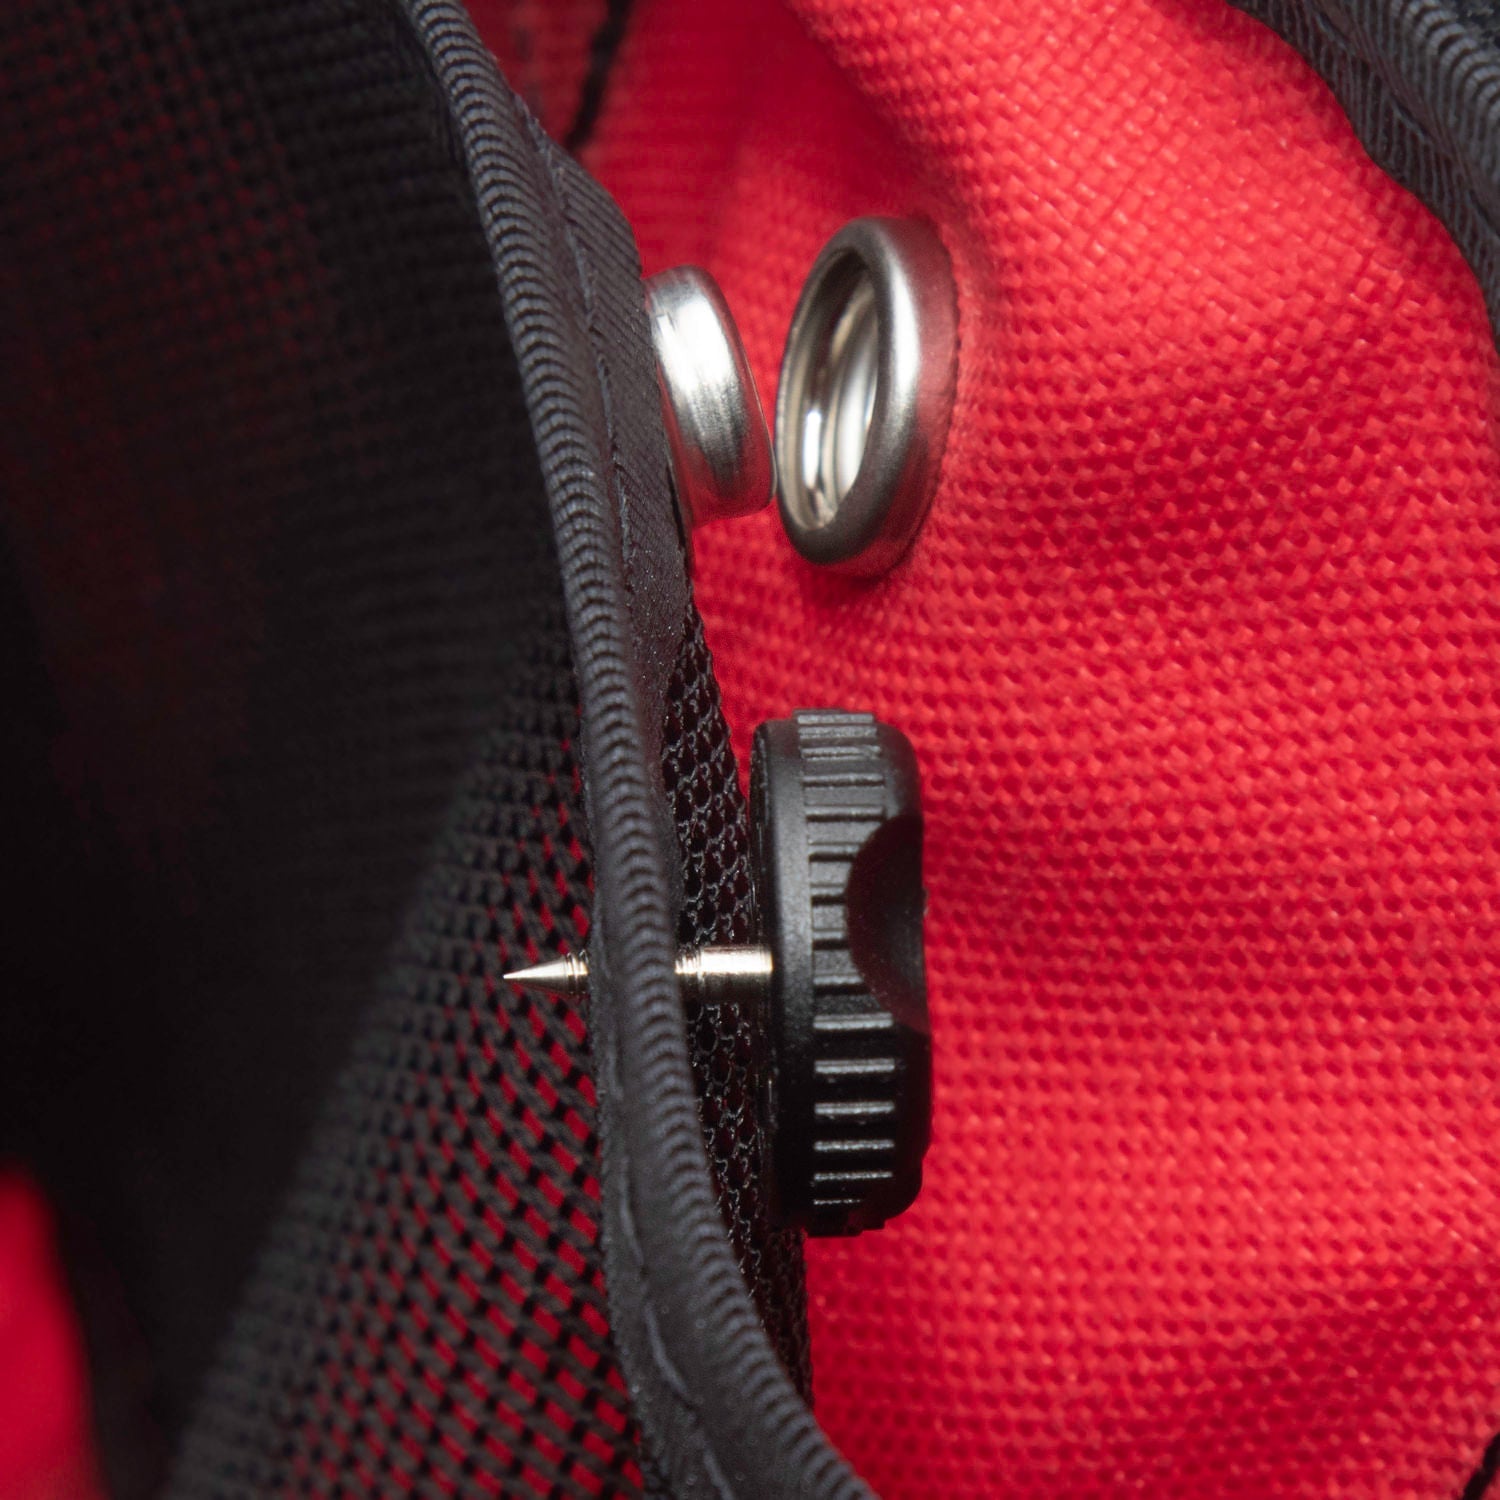 Pin-Mounted Bag Key Clip